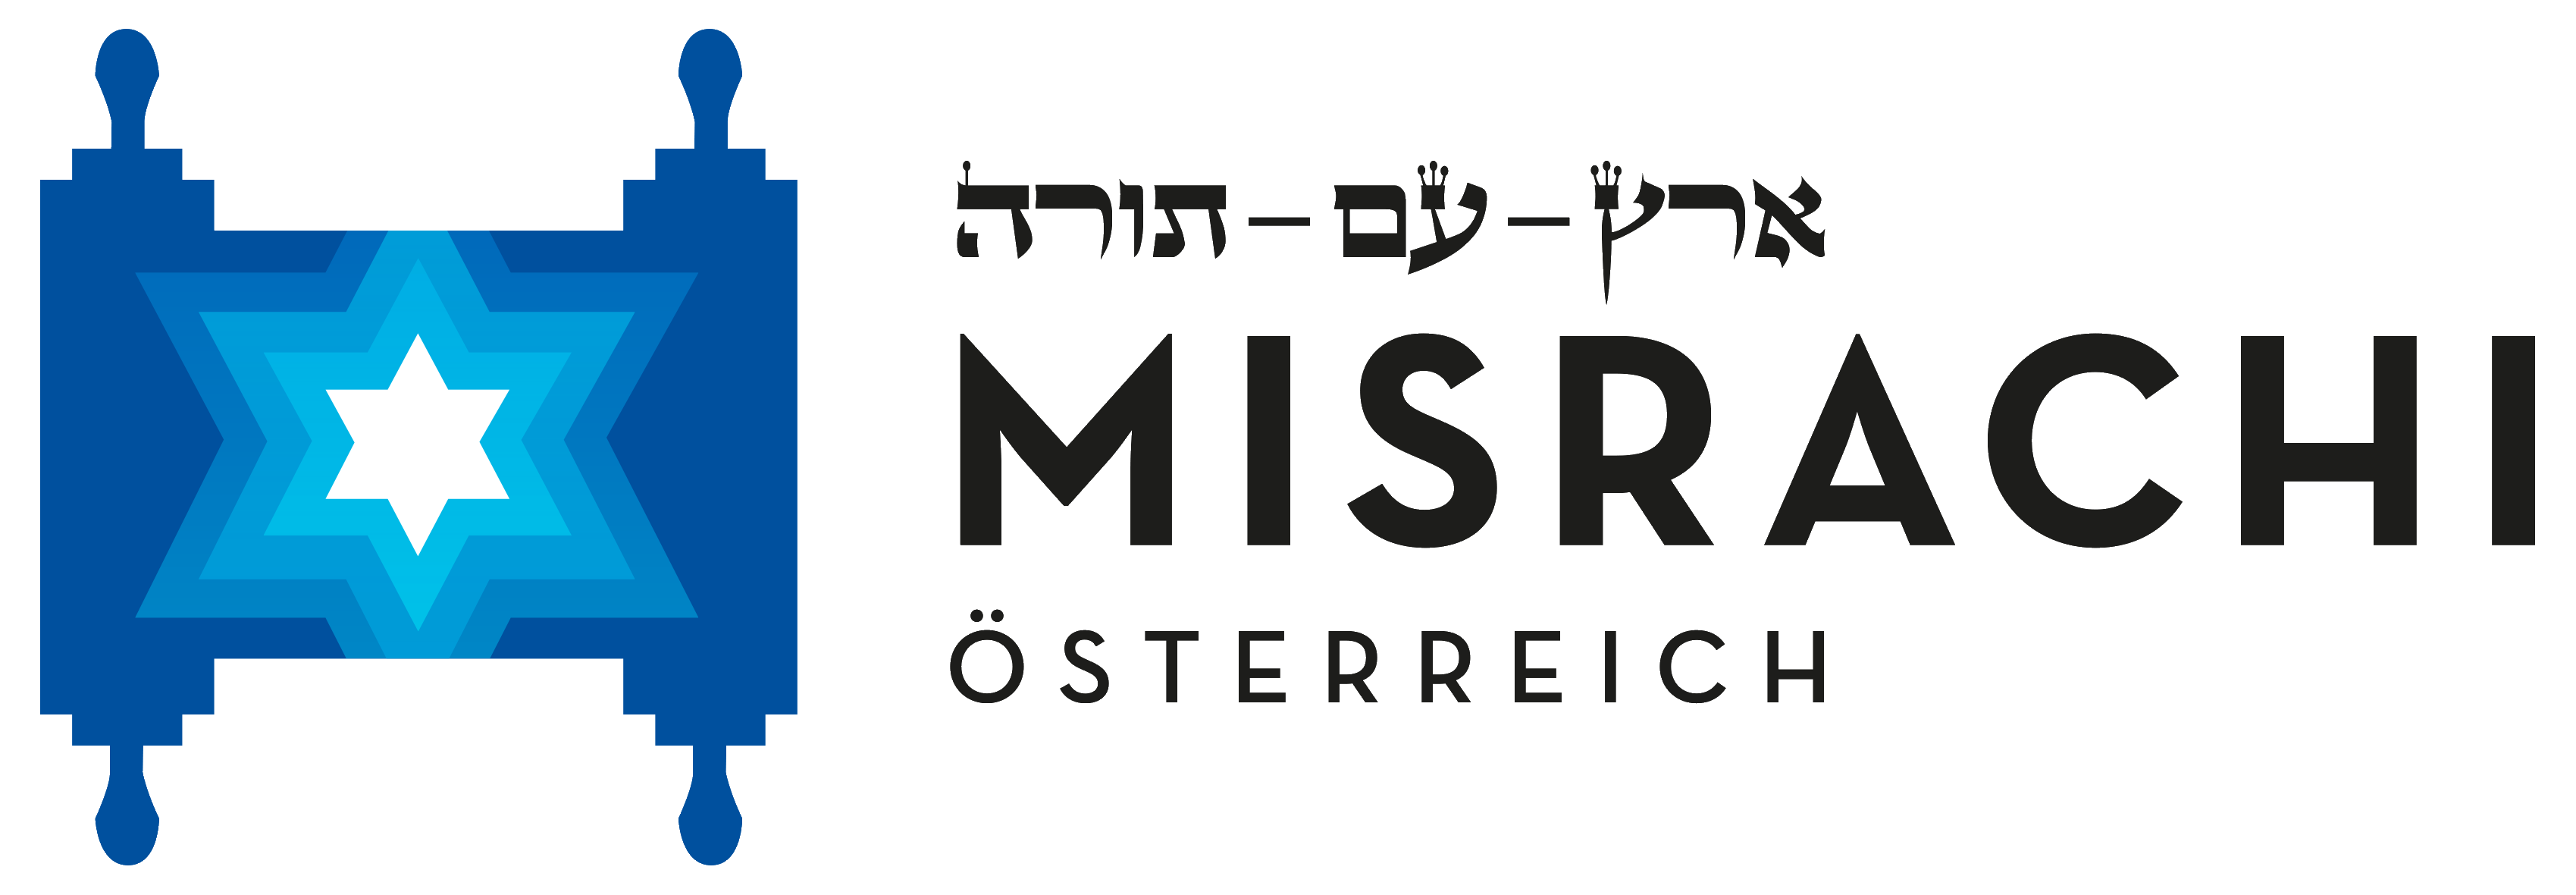 misrachi logo transparent